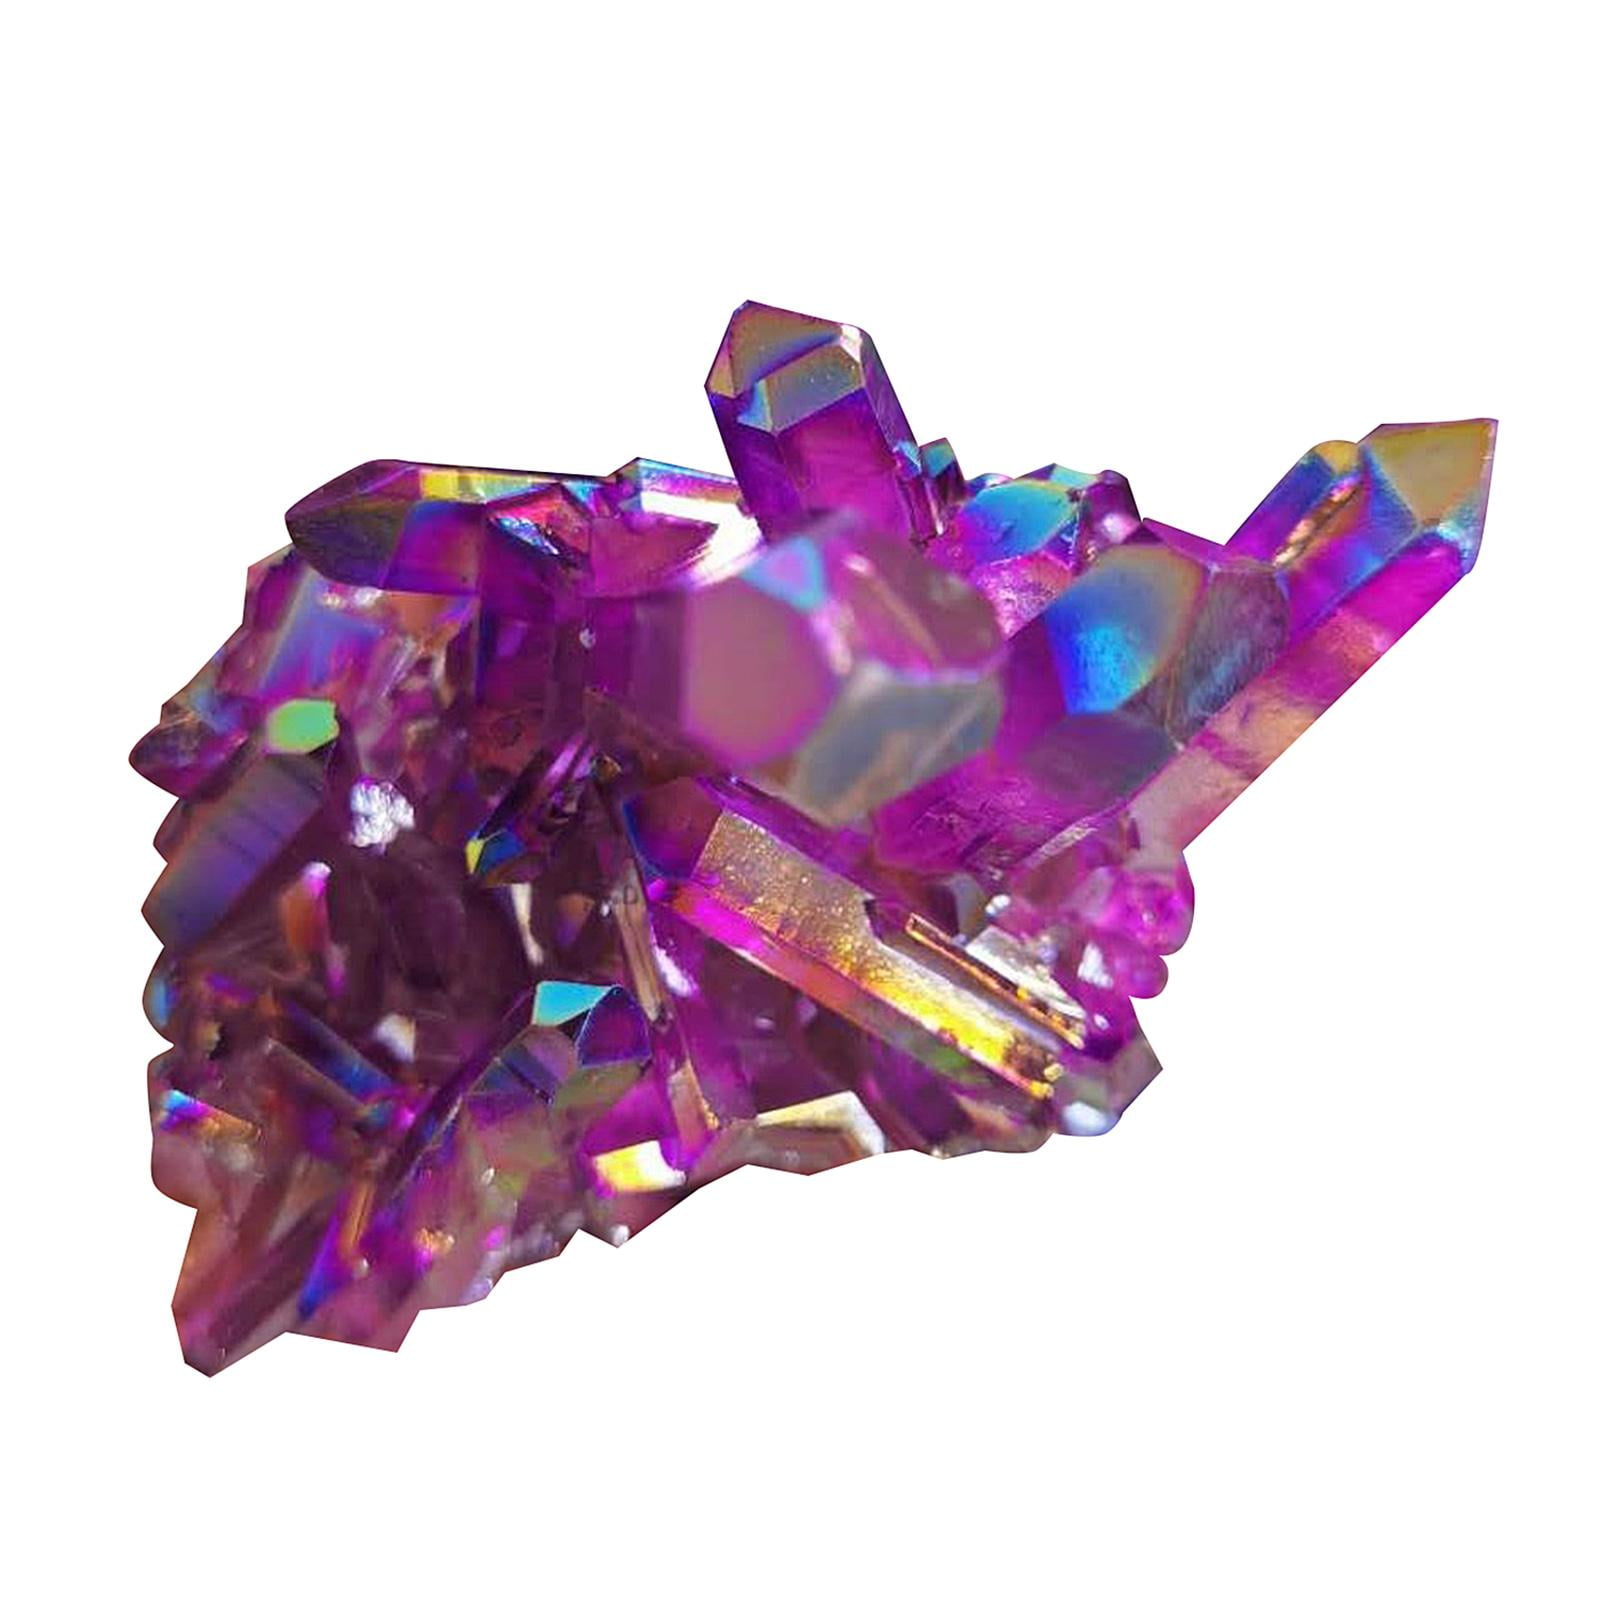 12 x Lilac Lavender Amethyst Tumblestones Crystal 12mm-16mm A Grade Wholesale 